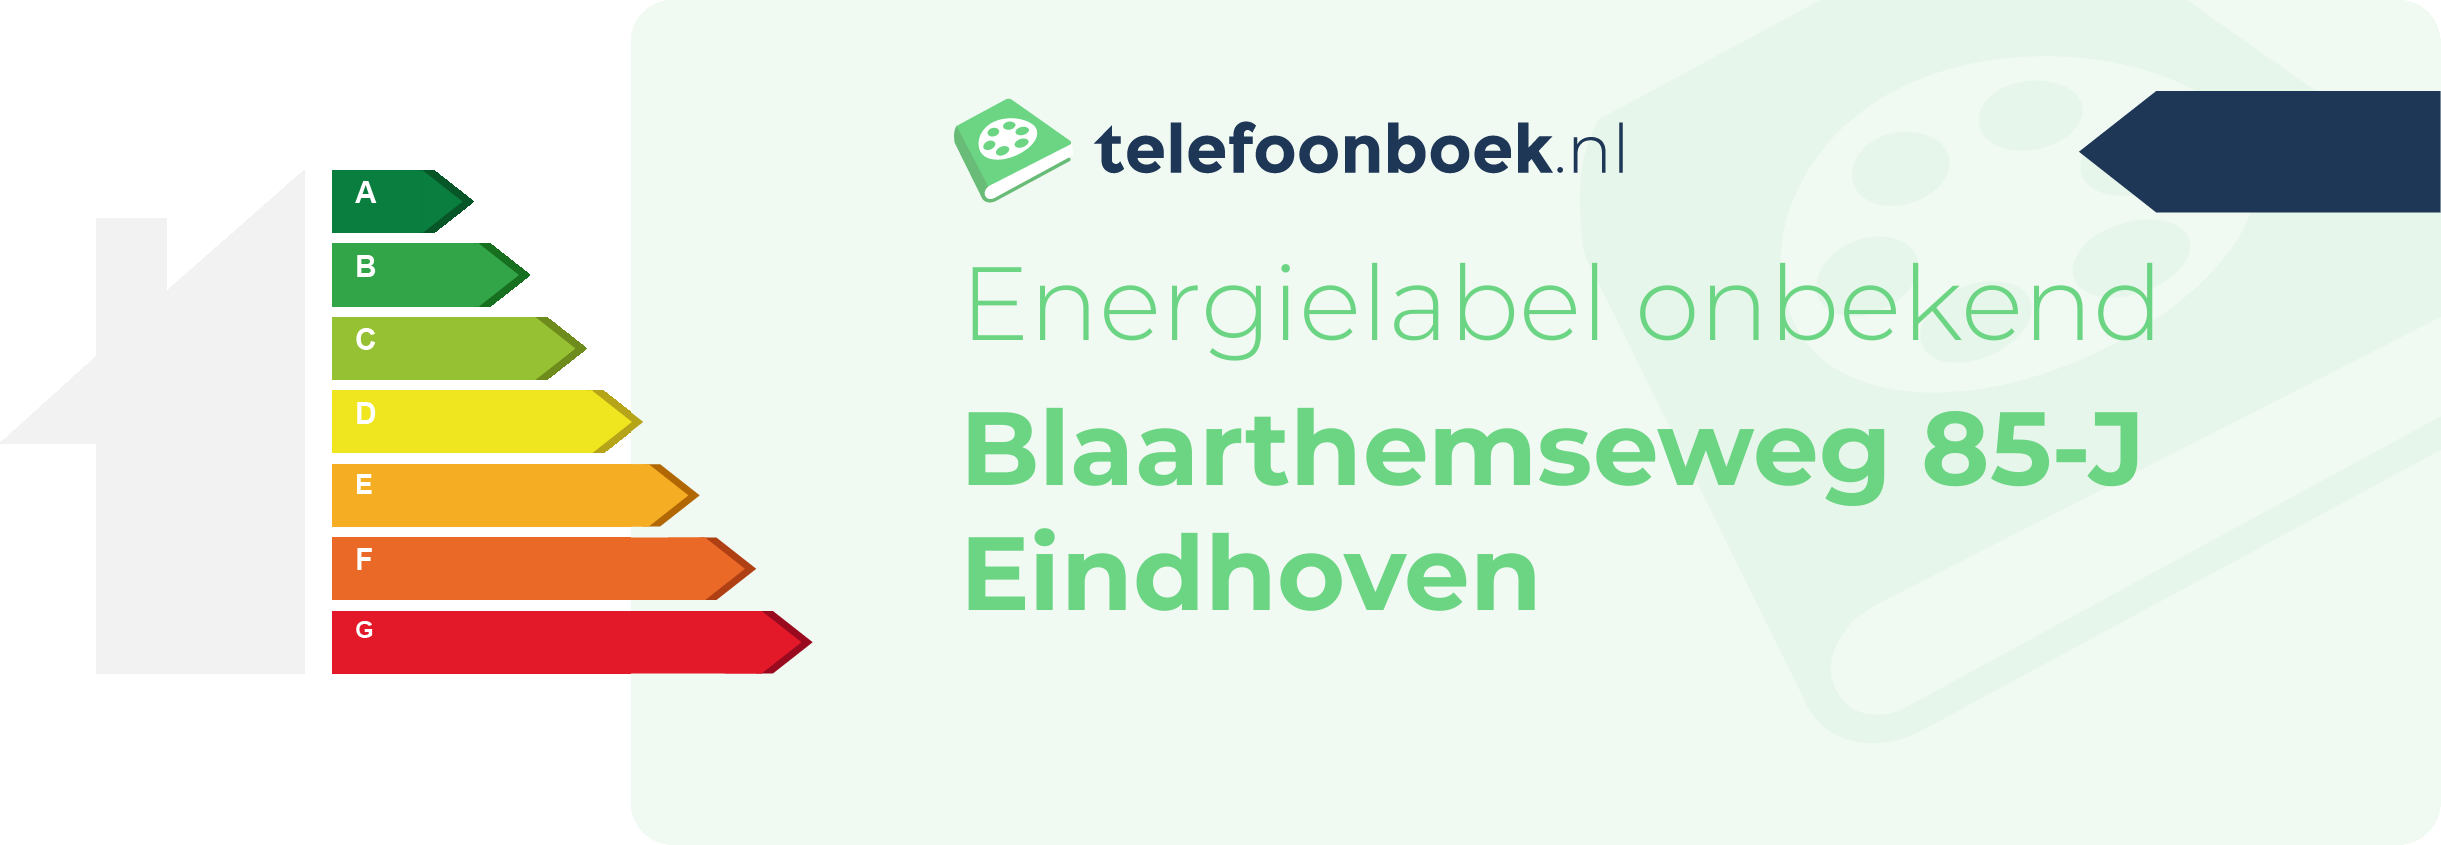 Energielabel Blaarthemseweg 85-J Eindhoven